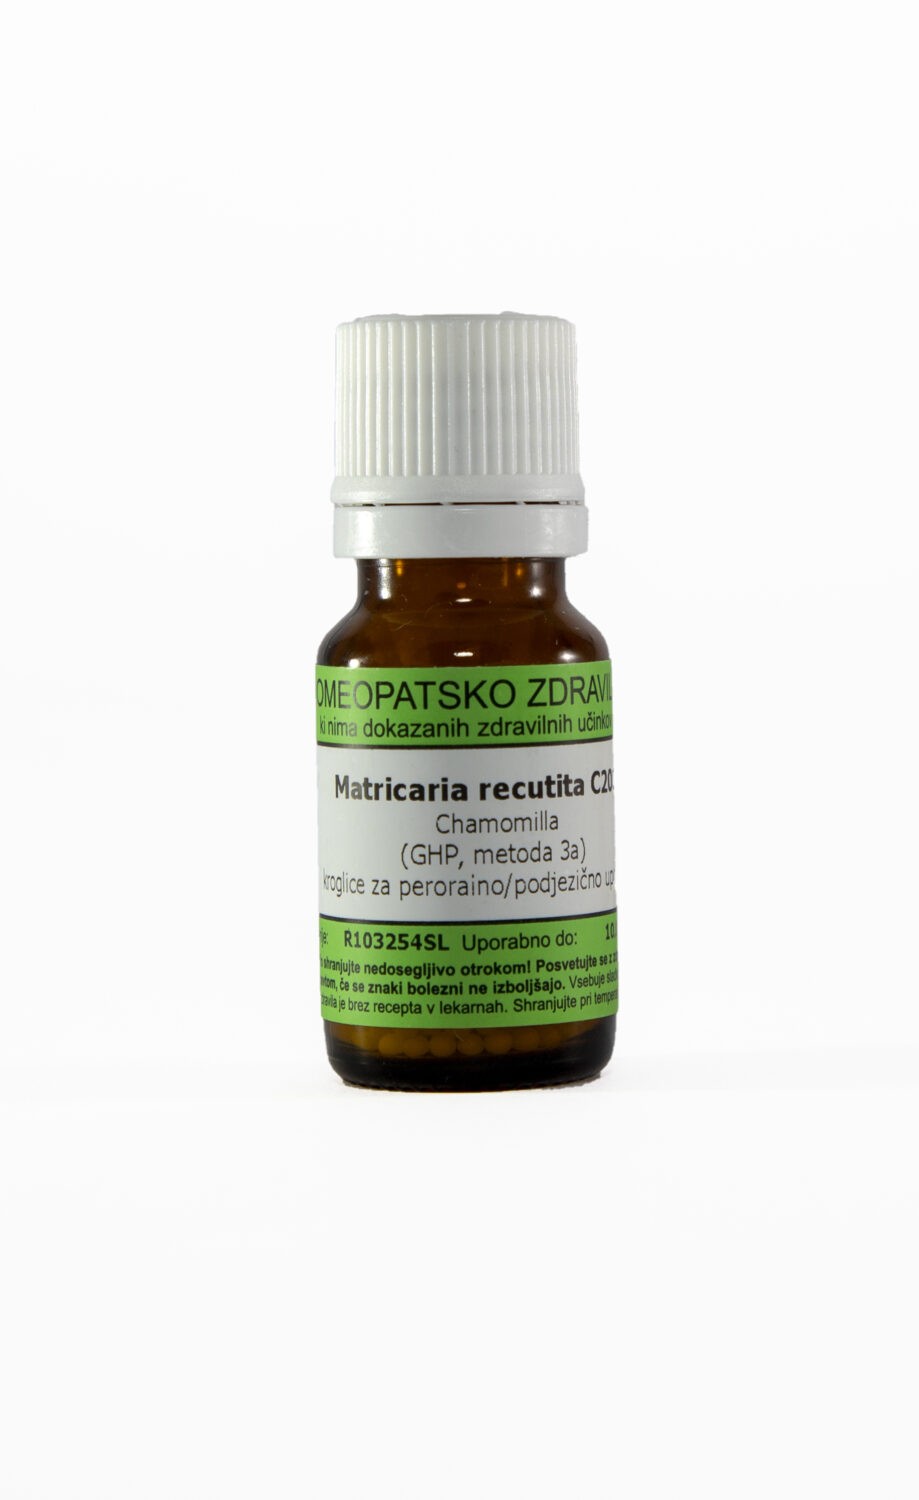 Matricaria recutita C6 homeopatske kroglice, 1 g